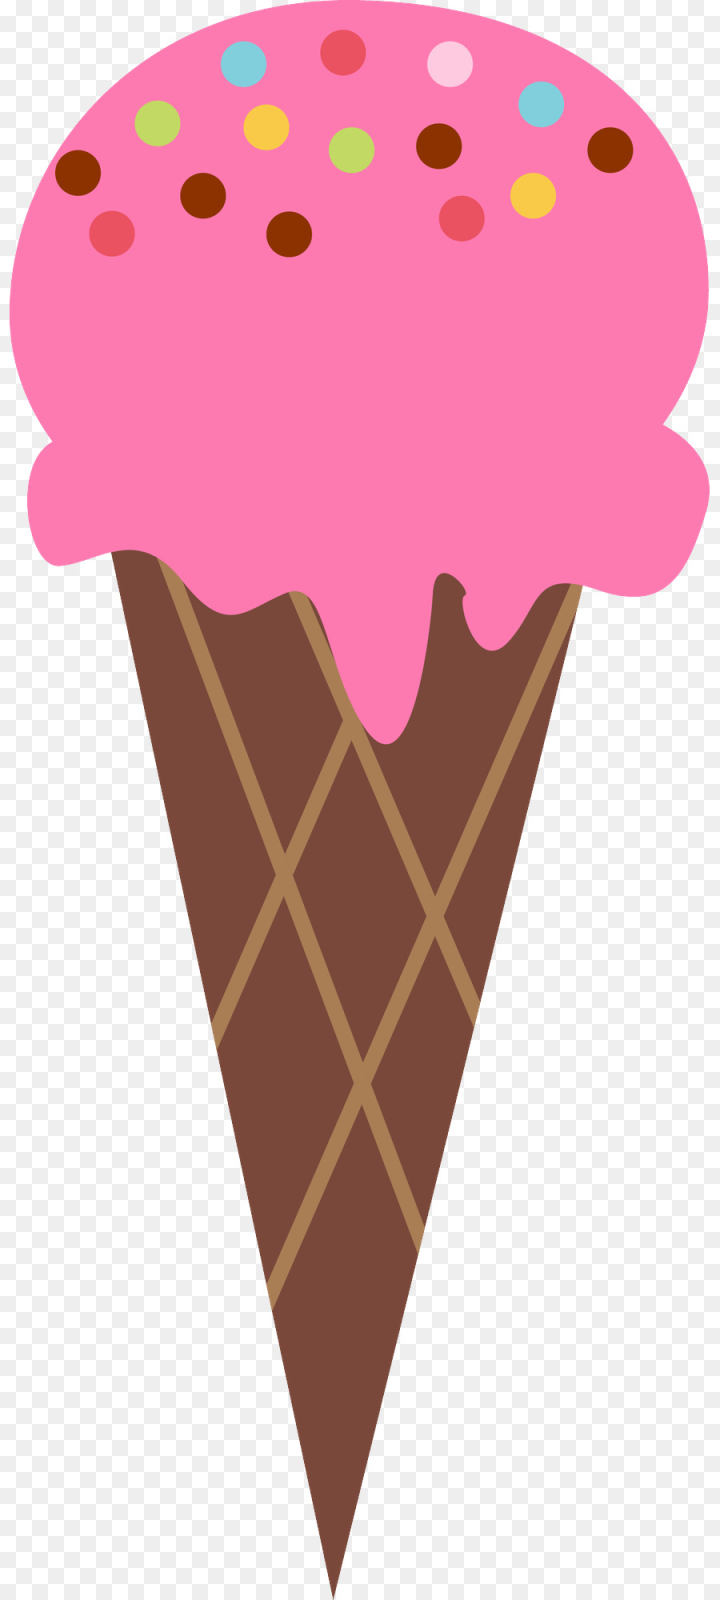 ice cream cone,frozen dessert,dessert,ice cream,food,soft serve ice creams,dairy,cone,chocolate ice cream,png